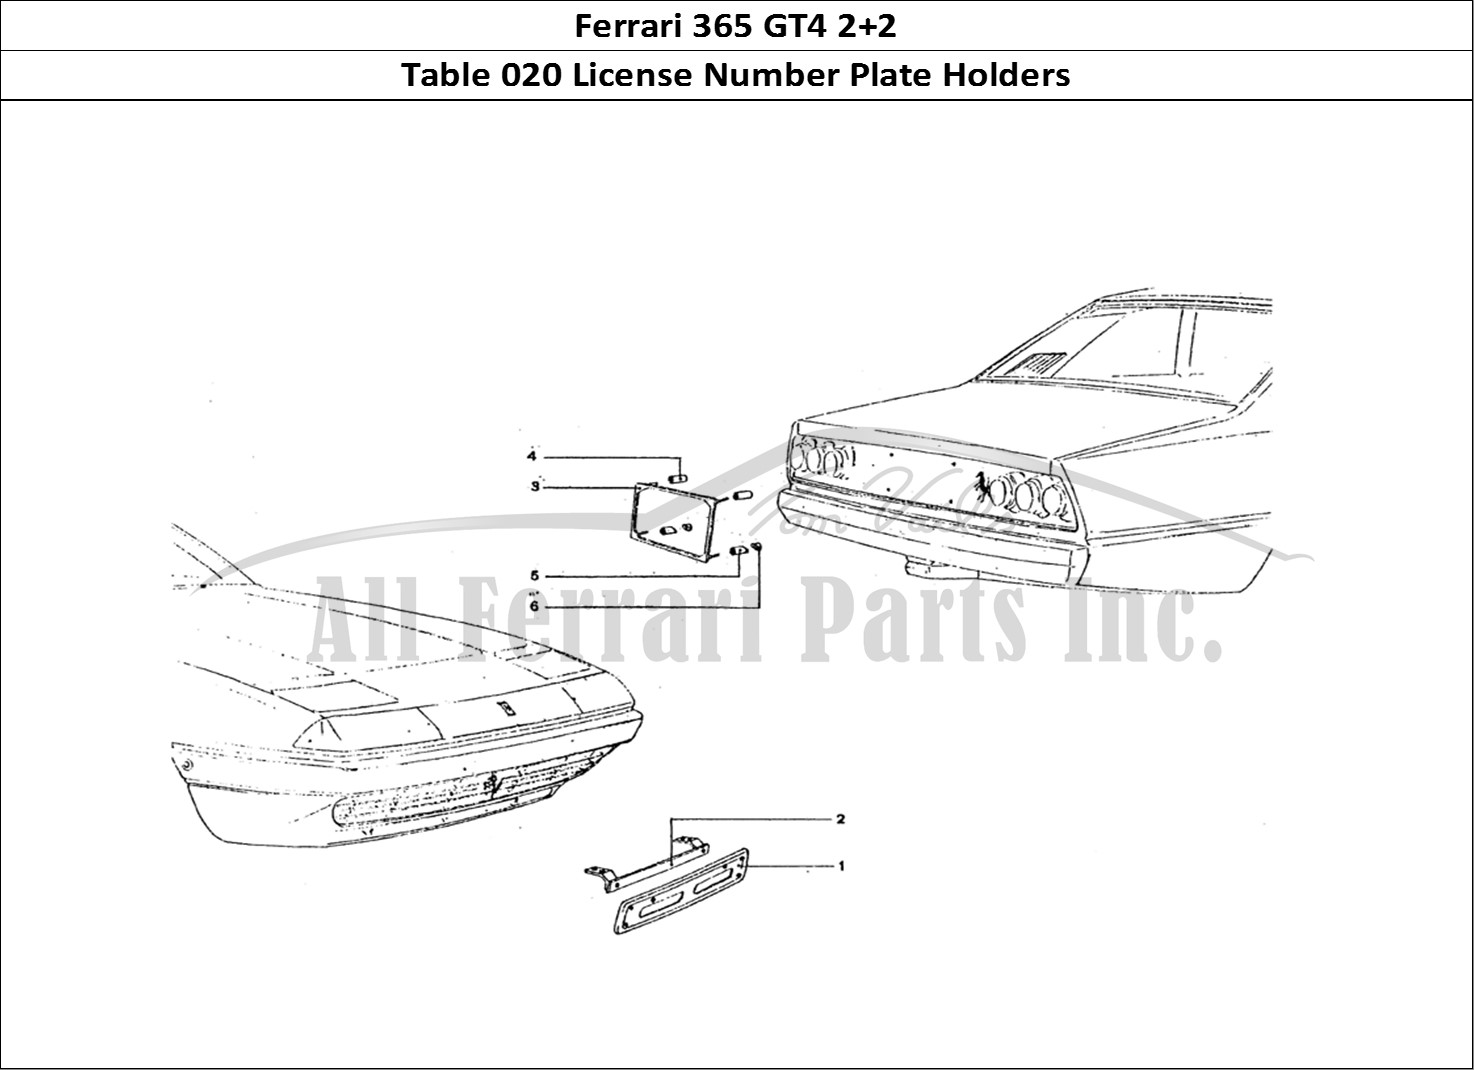 Ferrari Parts Ferrari 365 GT4 2+2 Coachwork Page 020 Number plate holder